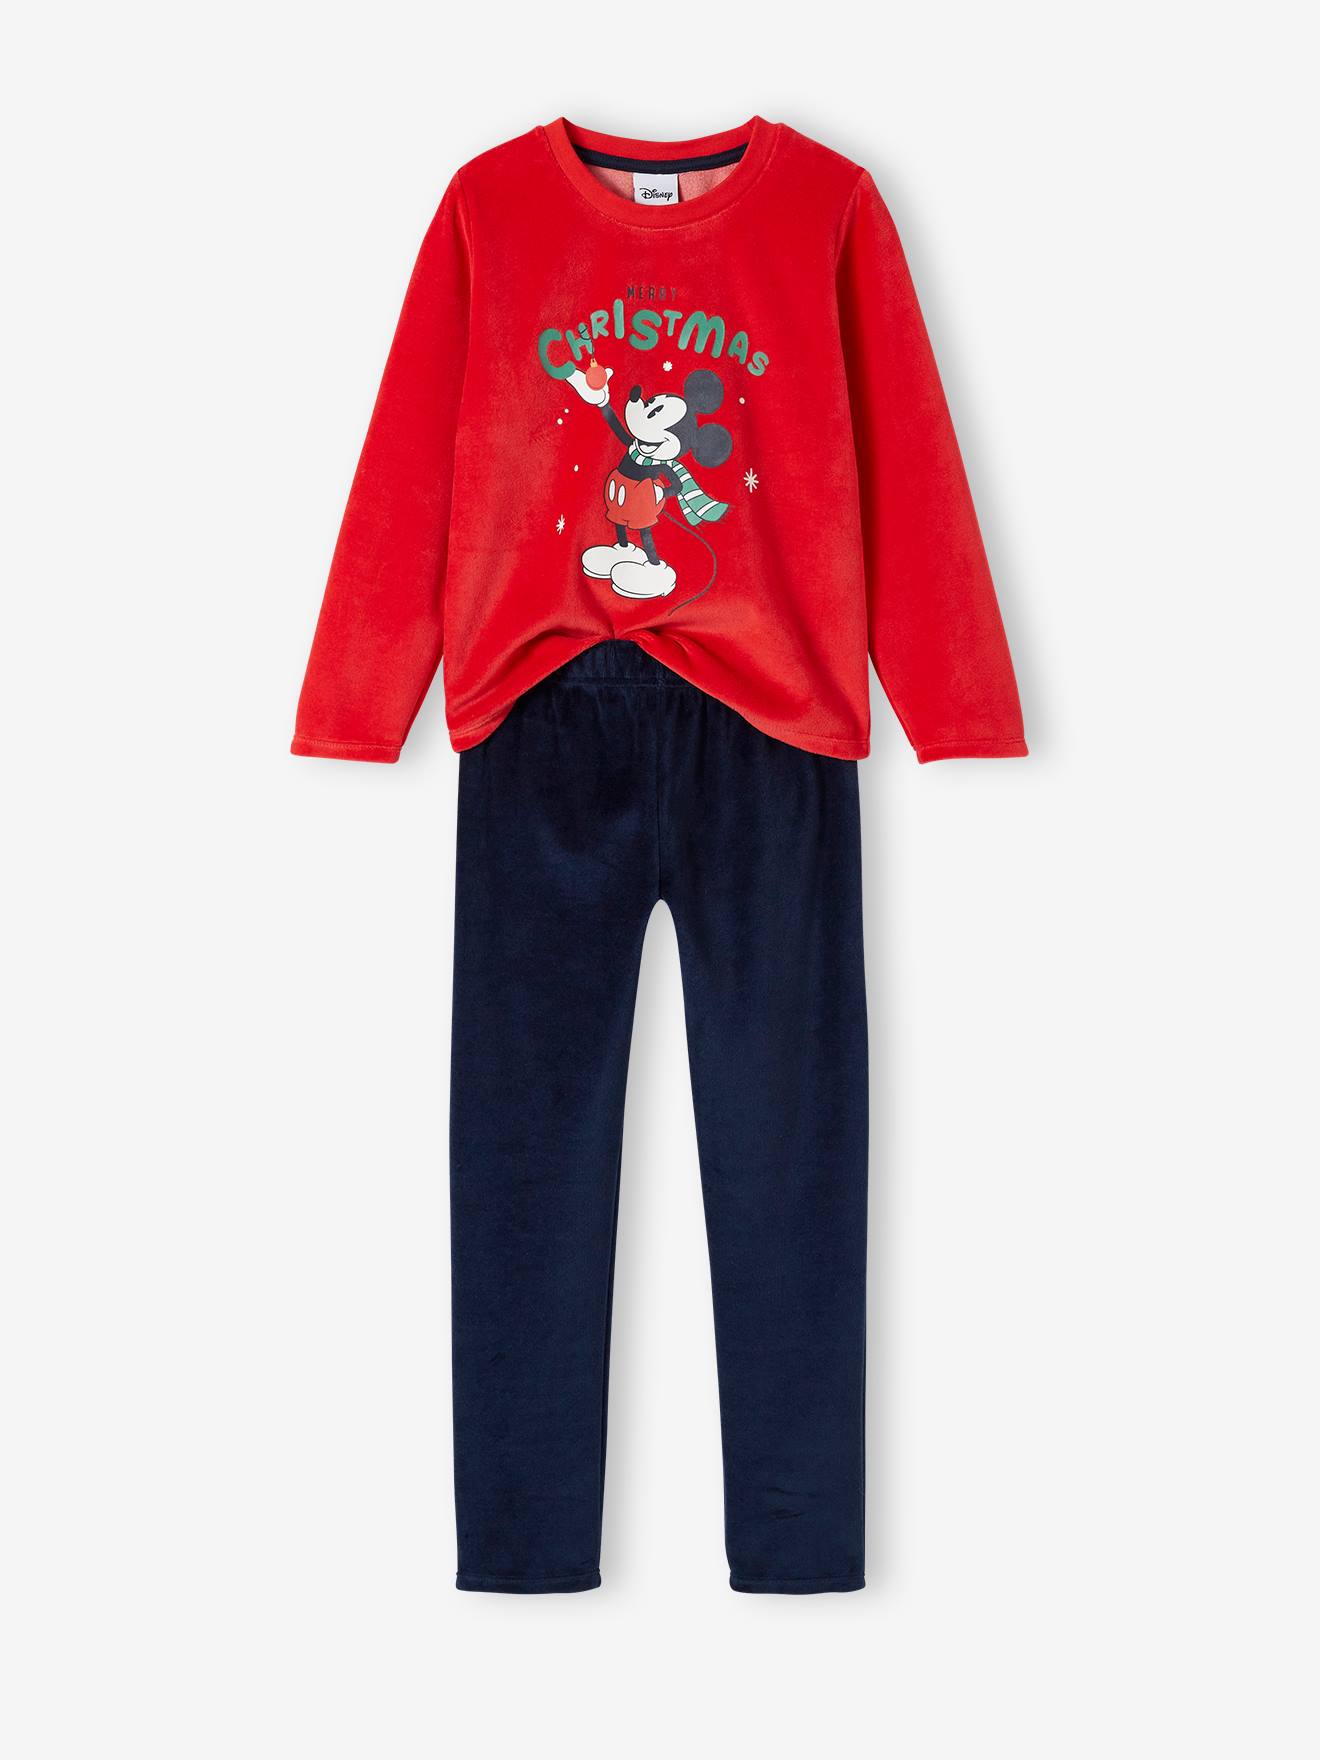 Christmas Special Disney(r) Mickey Mouse Pyjamas for Boys red